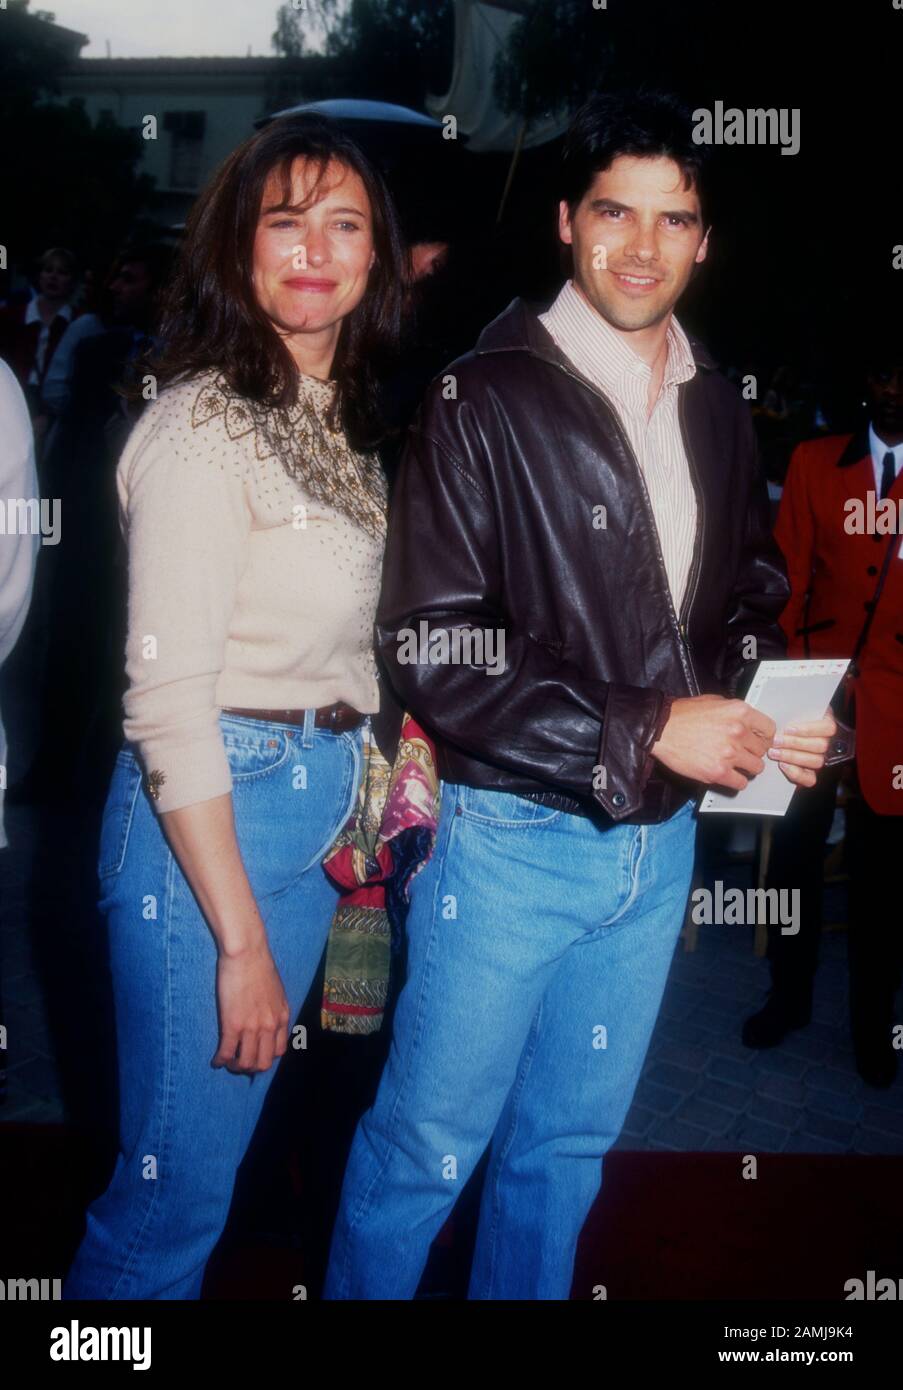 Los Angeles, California, USA 19th May 1995 Actress Mimi Rogers and husband  producer Chris Ciaffa attend 'Braveheart' Premiere on May 19, 1995 at  Paramount Studios in Los Angeles, California, USA. Photo by